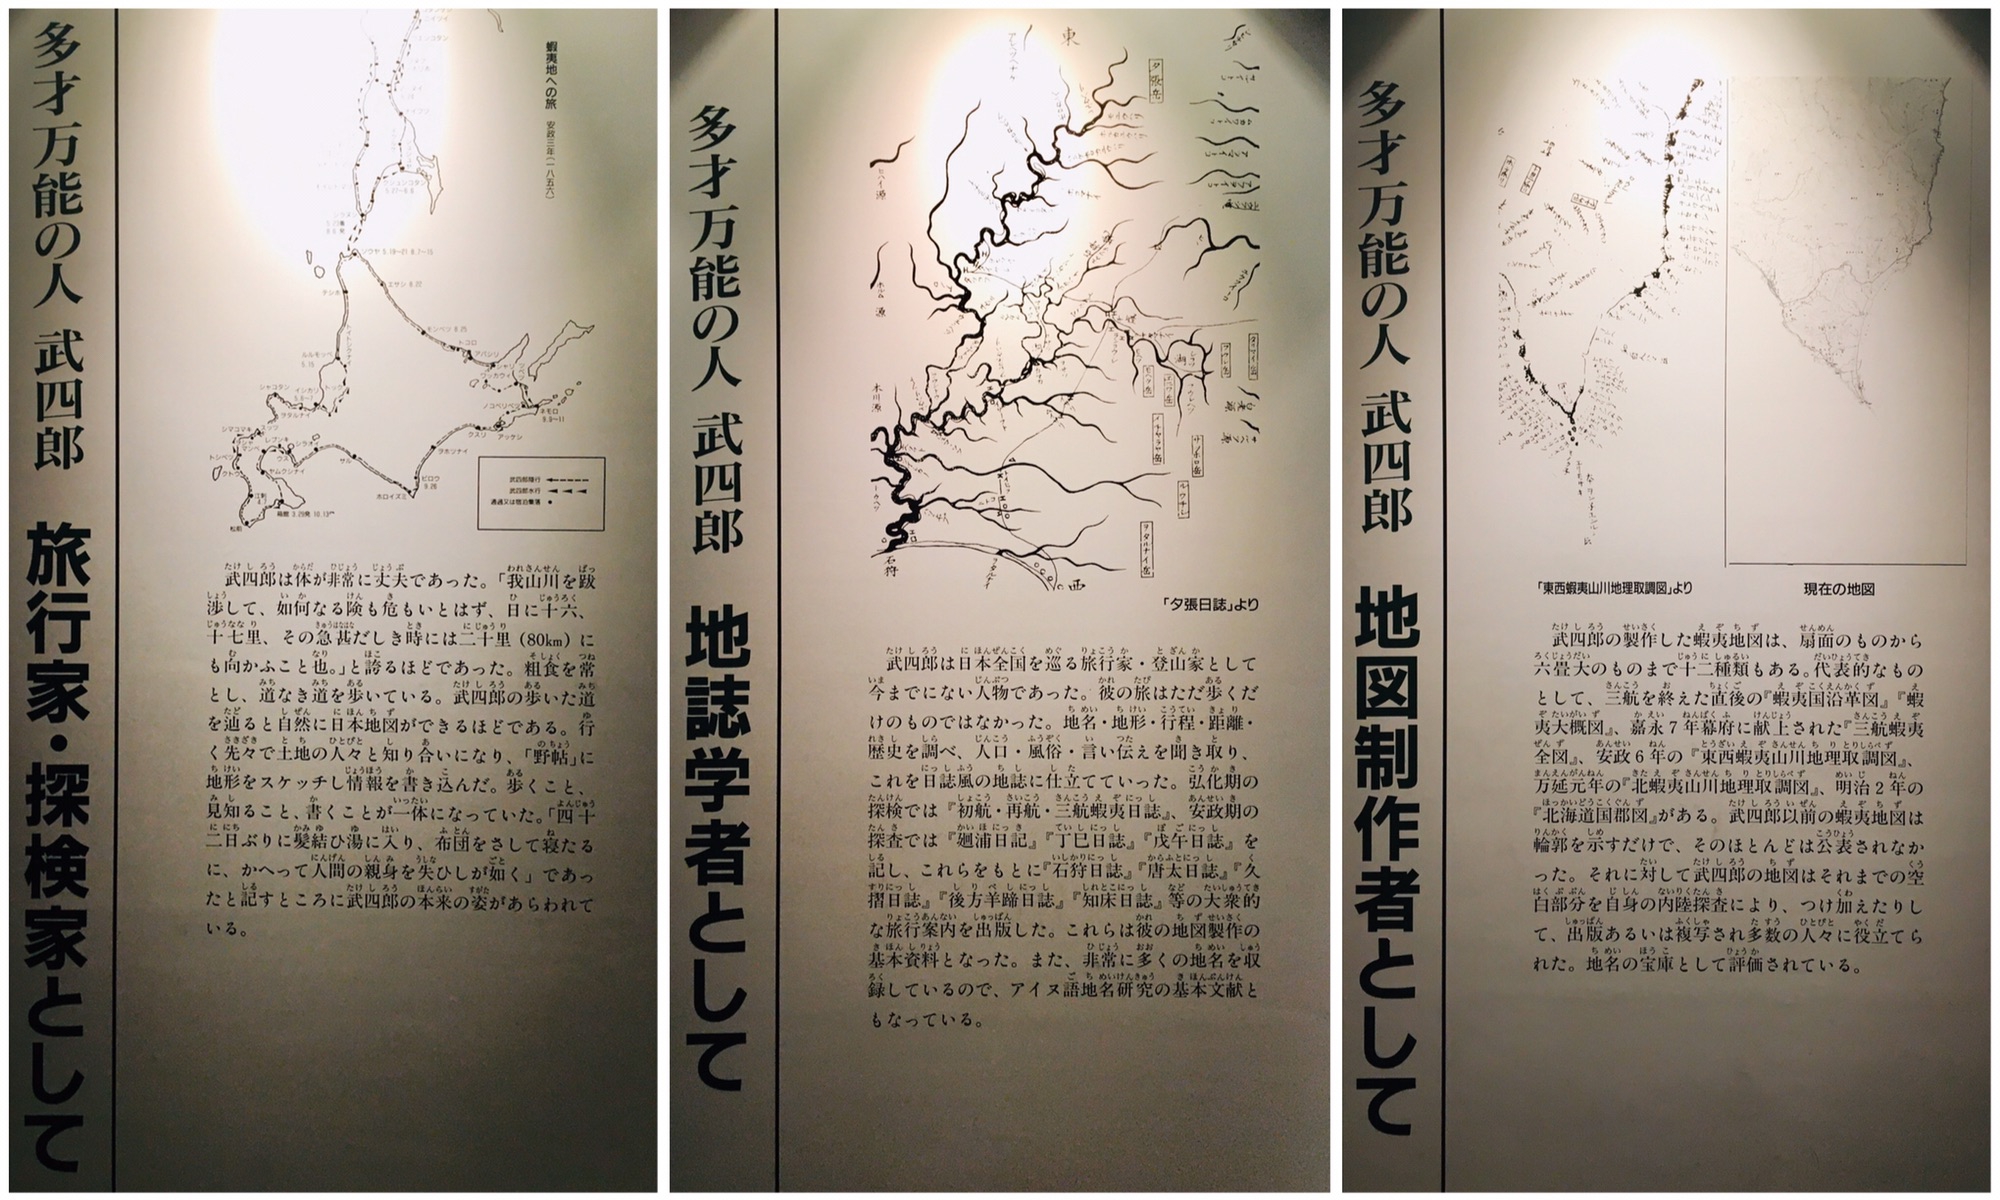 Kii Peninsula 紀伊半島 3 (10/12/19) Birthplace of Matsuura 